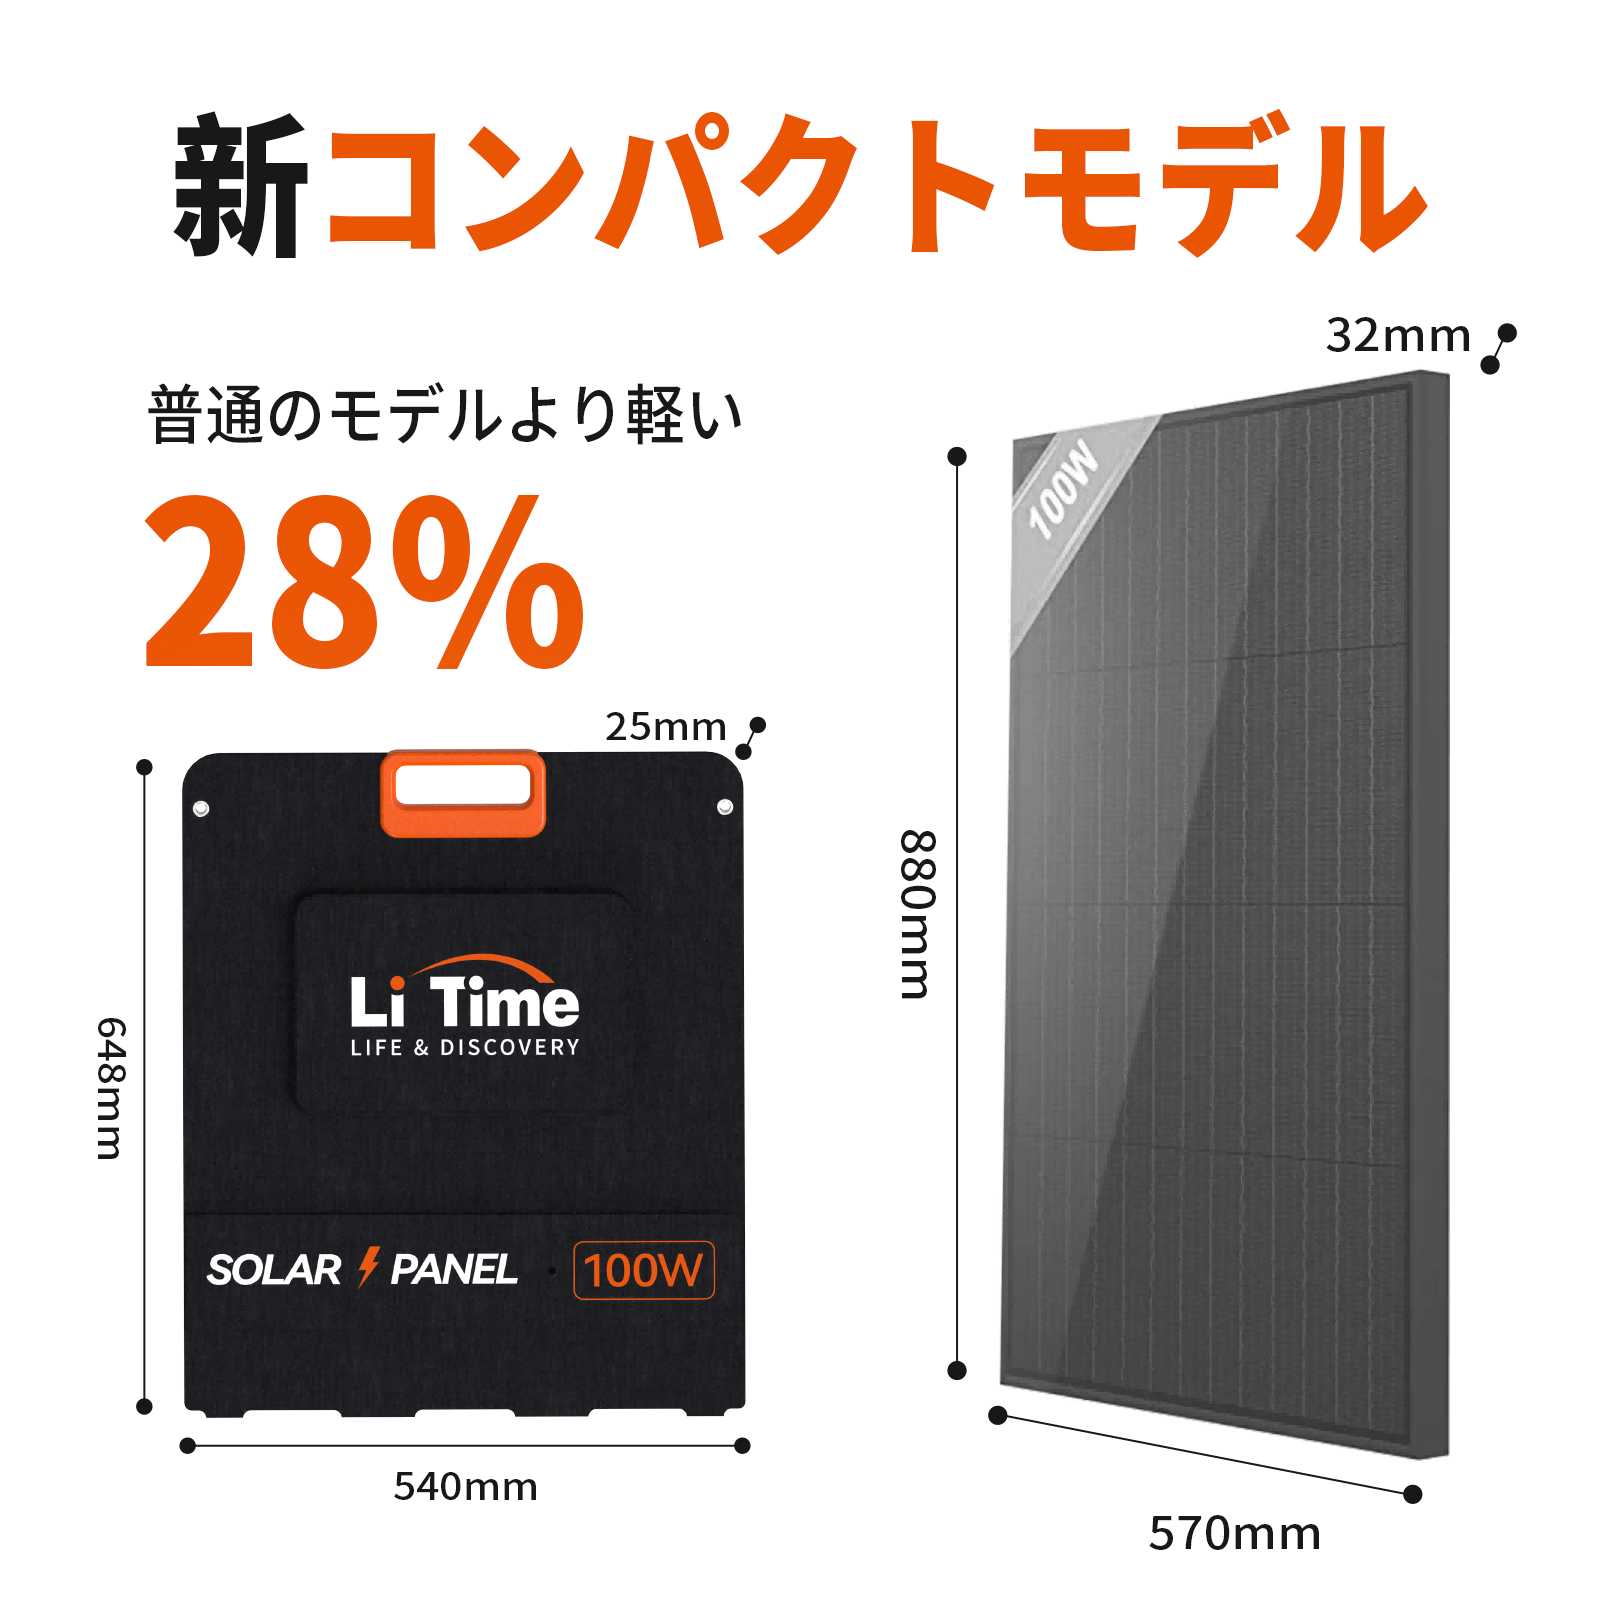 LiTime ソーラーパネル 100W 折りたたみ式 シリコン単結晶 高変換効率 LiTime-JP